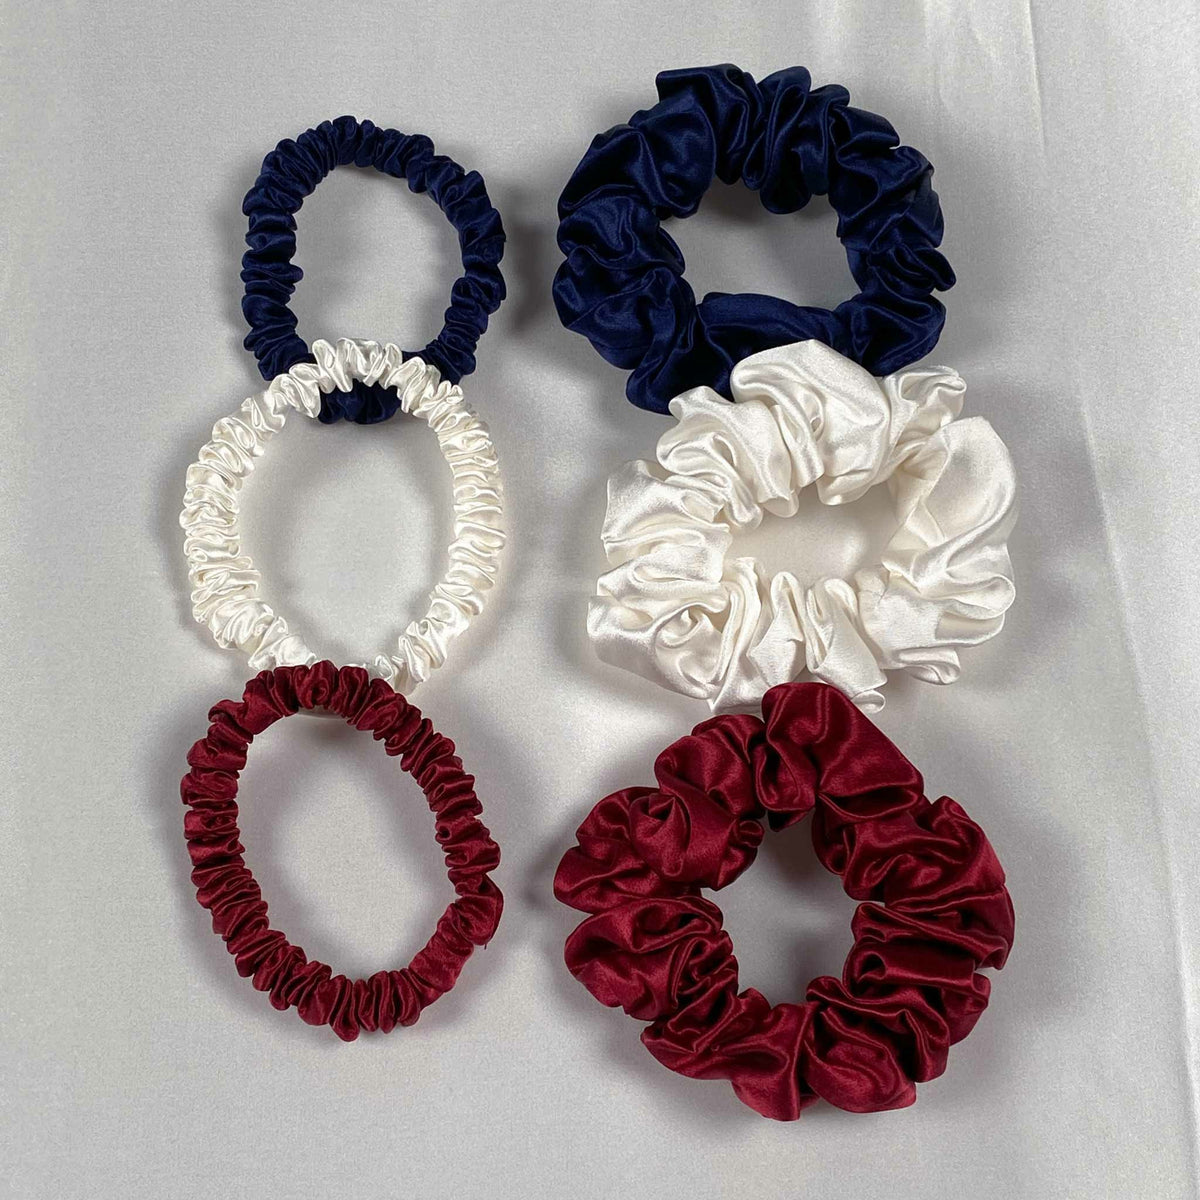 Ruby Red/Bright White/Navy Blue Scrunchies